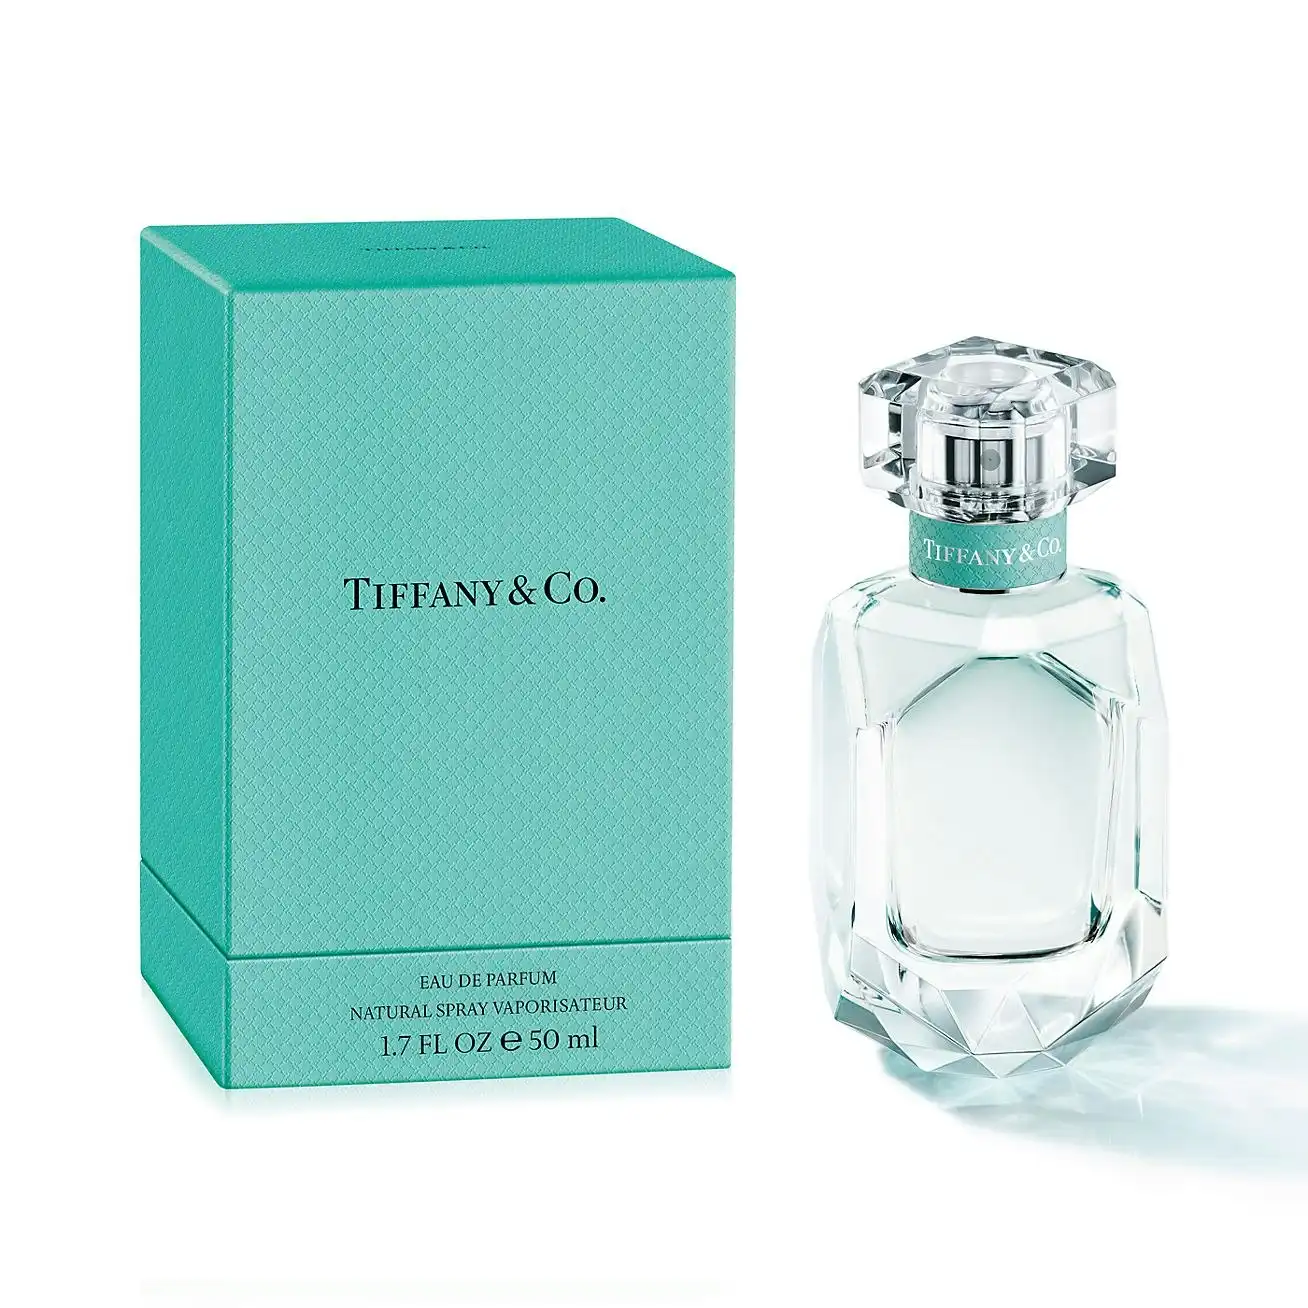 Tiffany & Co. 50ml Eau de Parfum